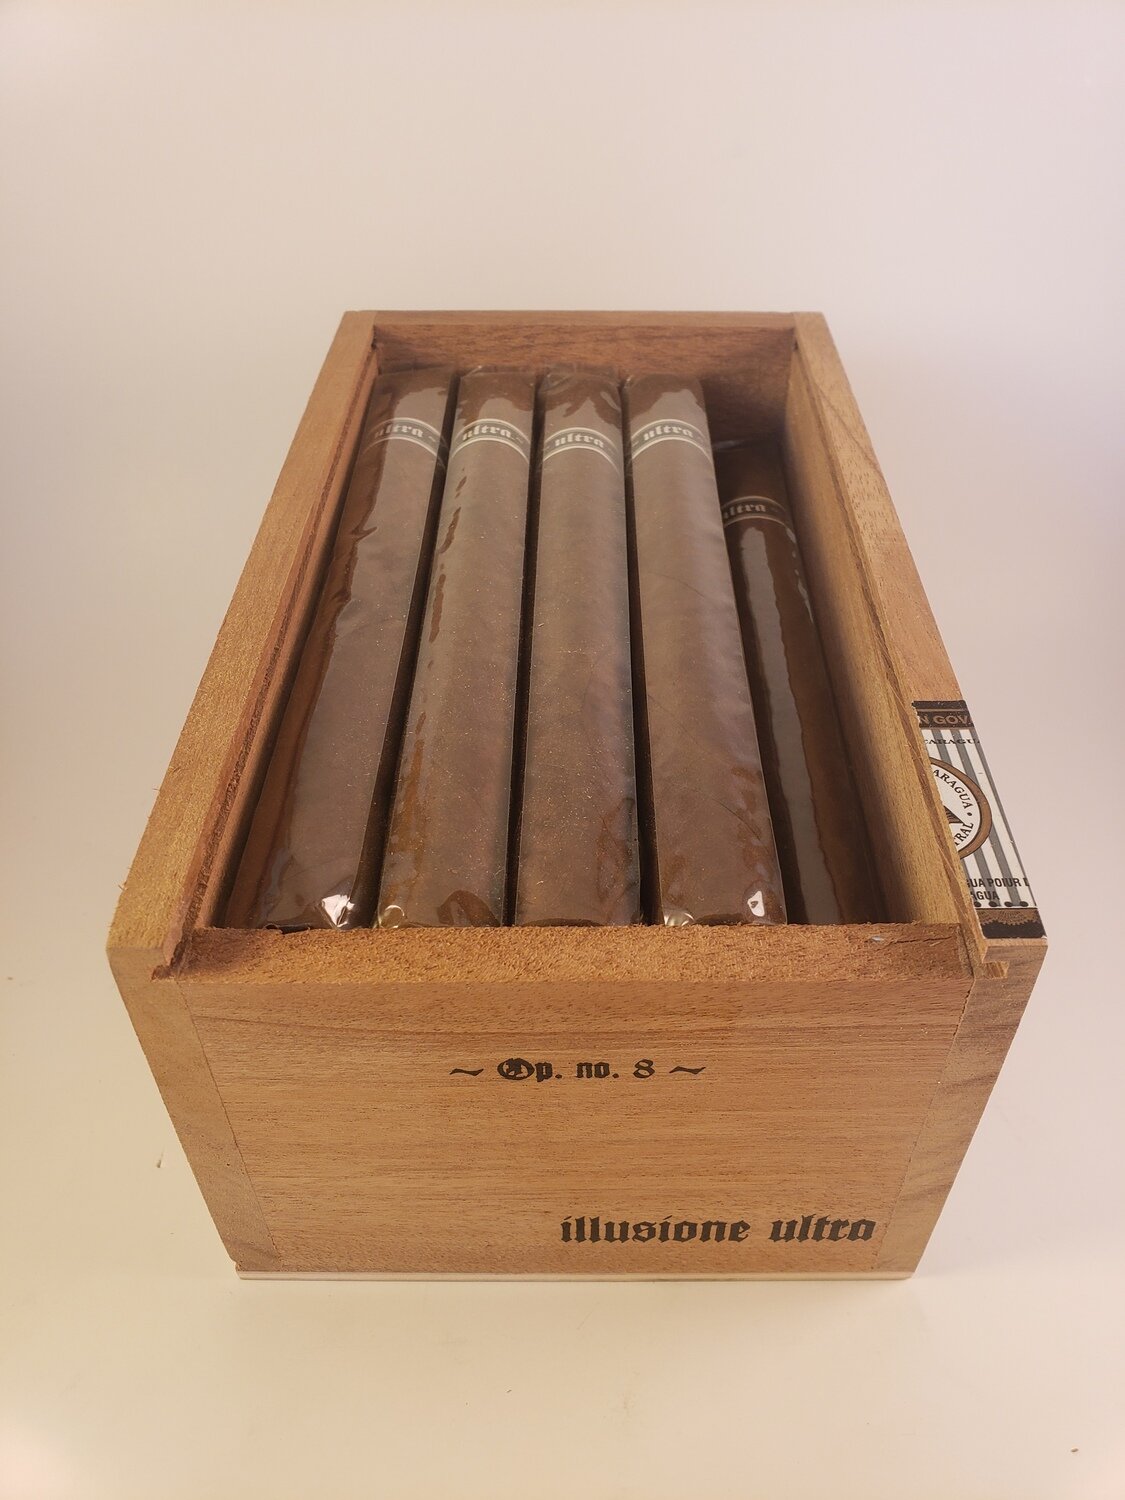 Illusione Ultra OP. No.4 Bench Pressed Robusto 4 3/4 x 48 Single Cigar